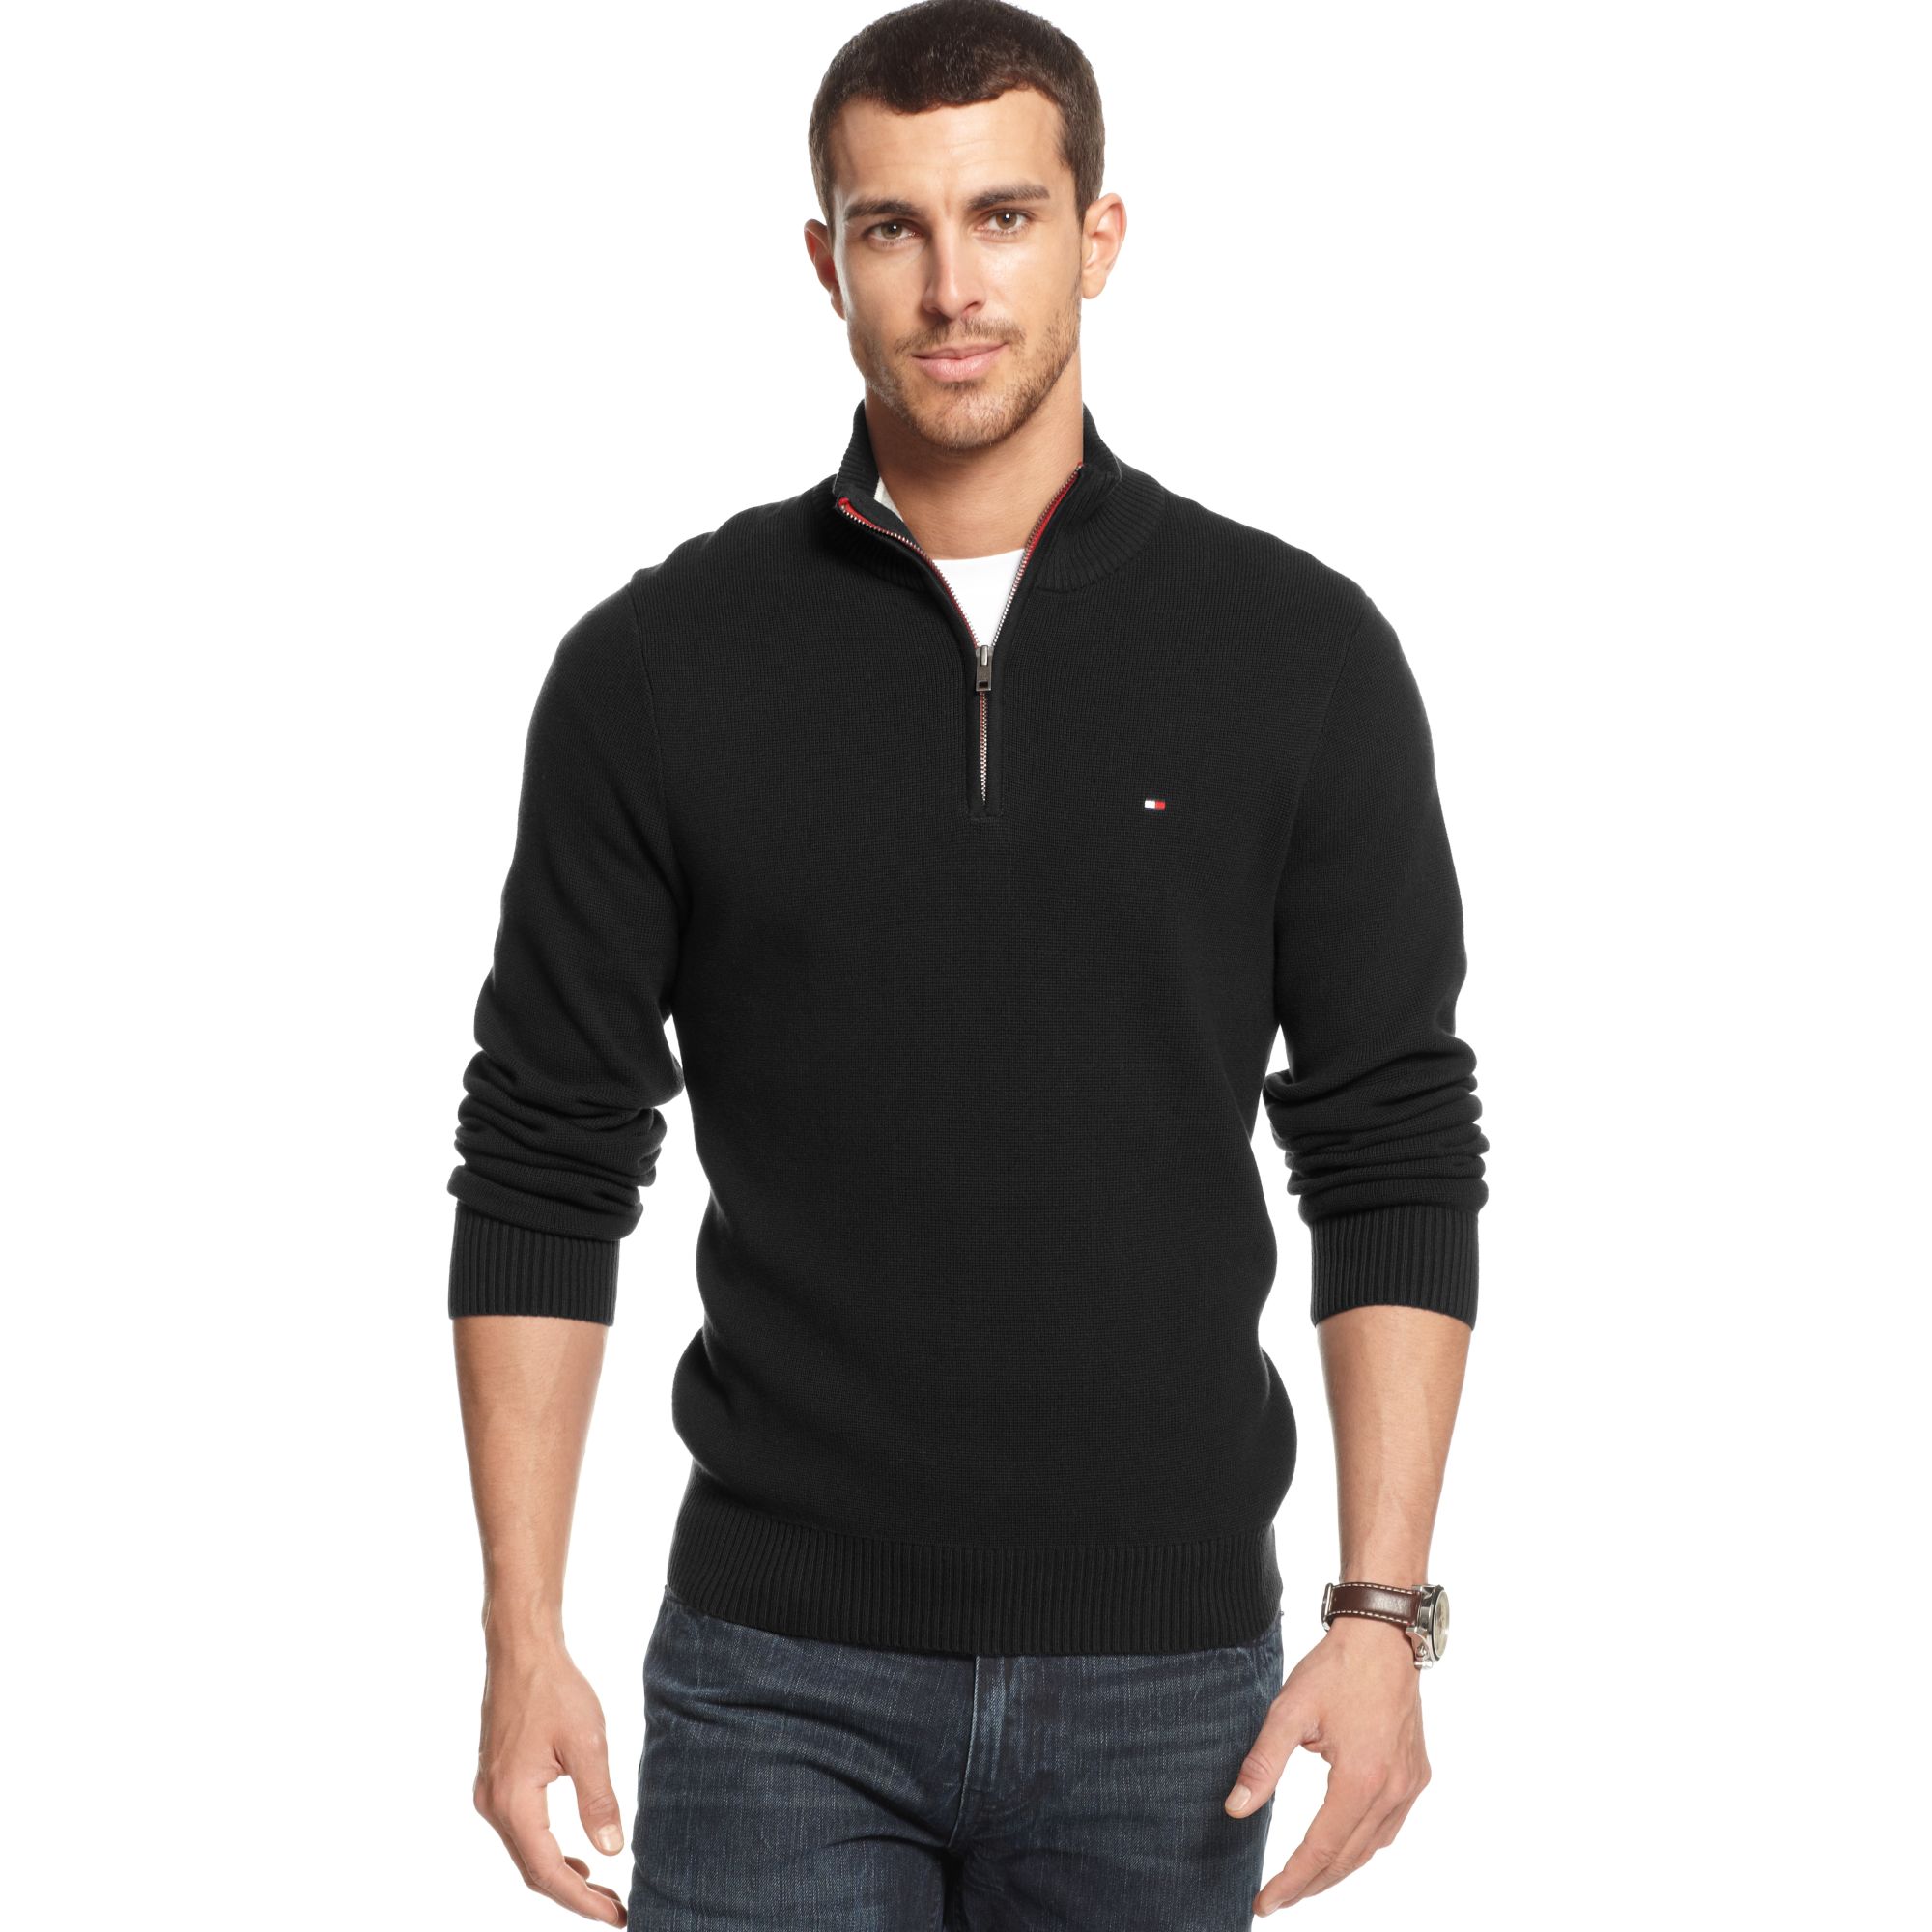 Tommy Hilfiger Zipper Sweater Sale Online, SAVE 60% - raptorunderlayment.com